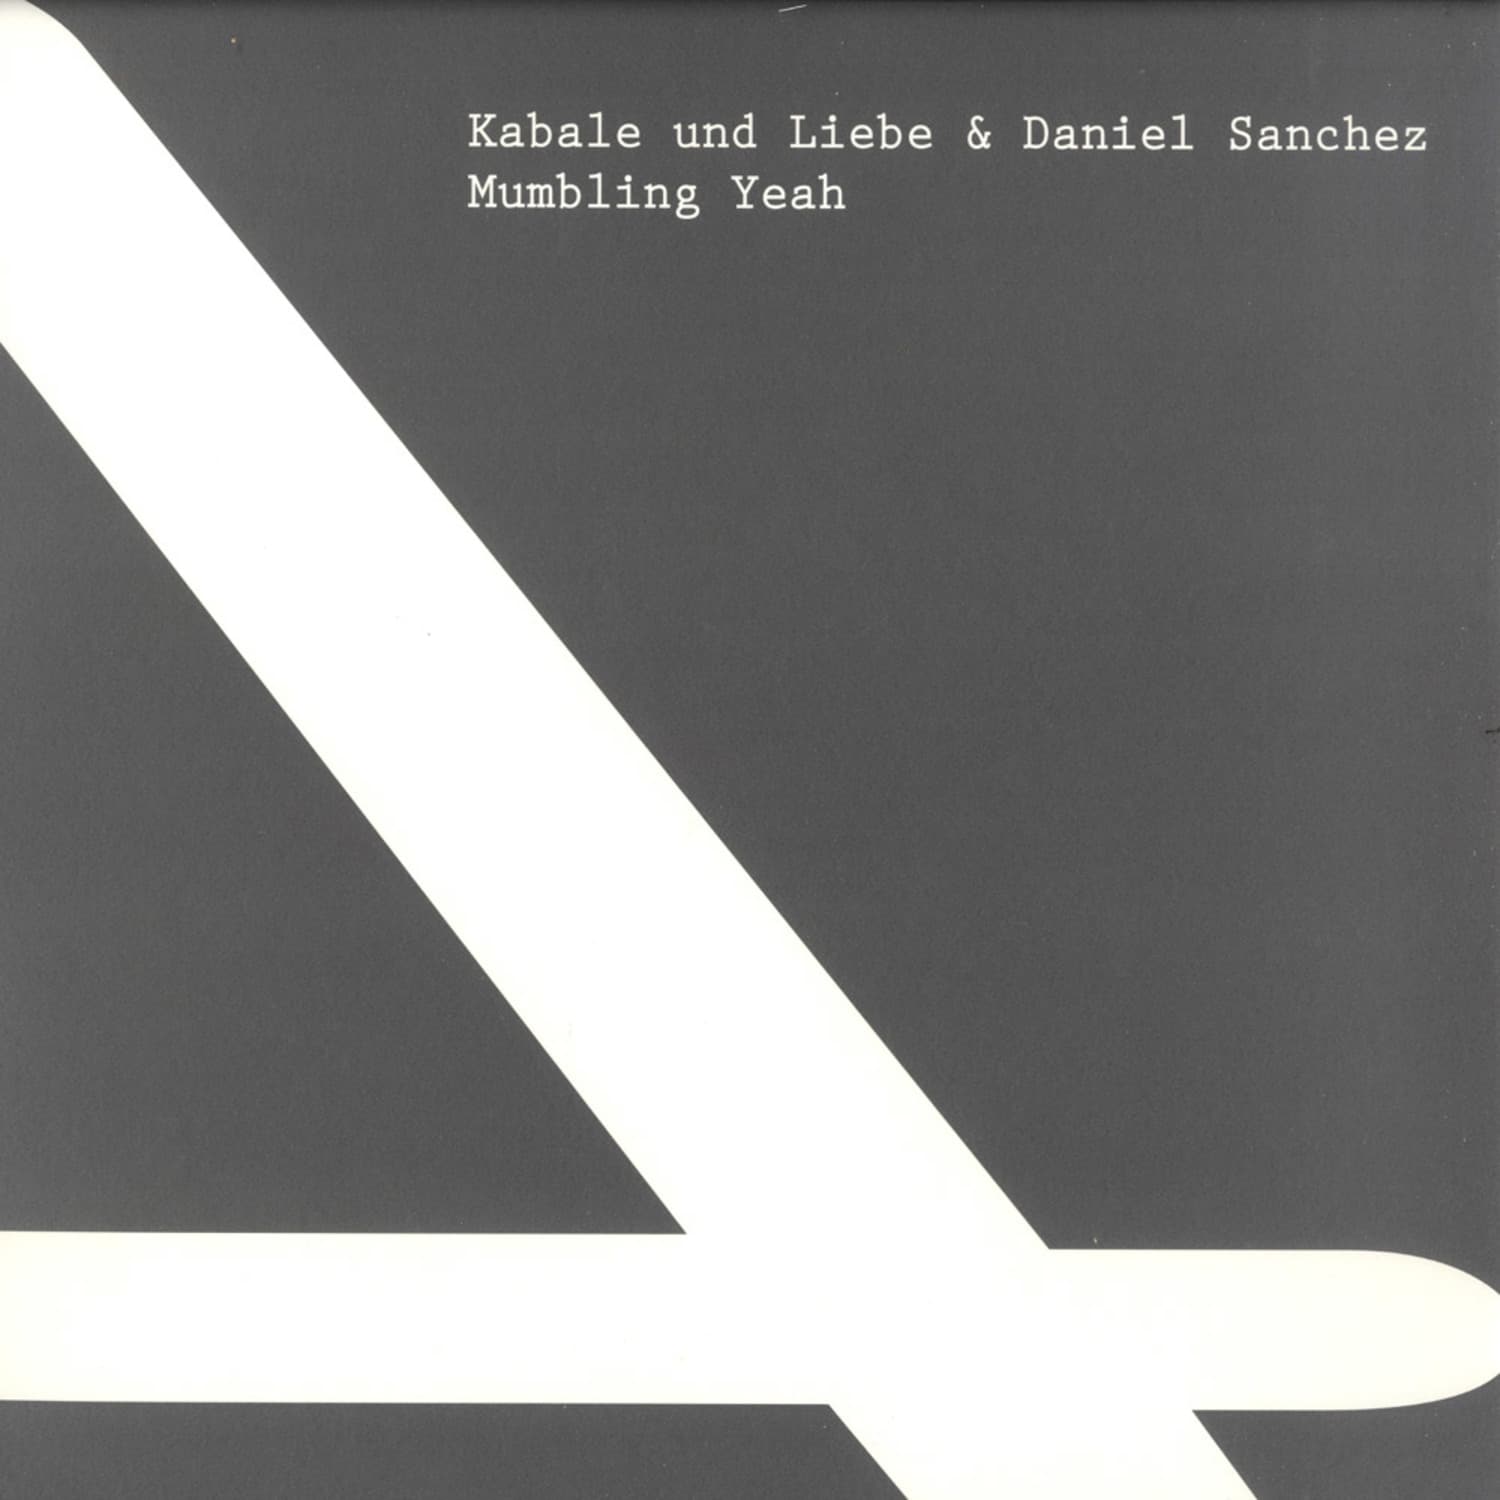 Kabale und Liebe and Daniel Sanchez - MUMBLING YEAH